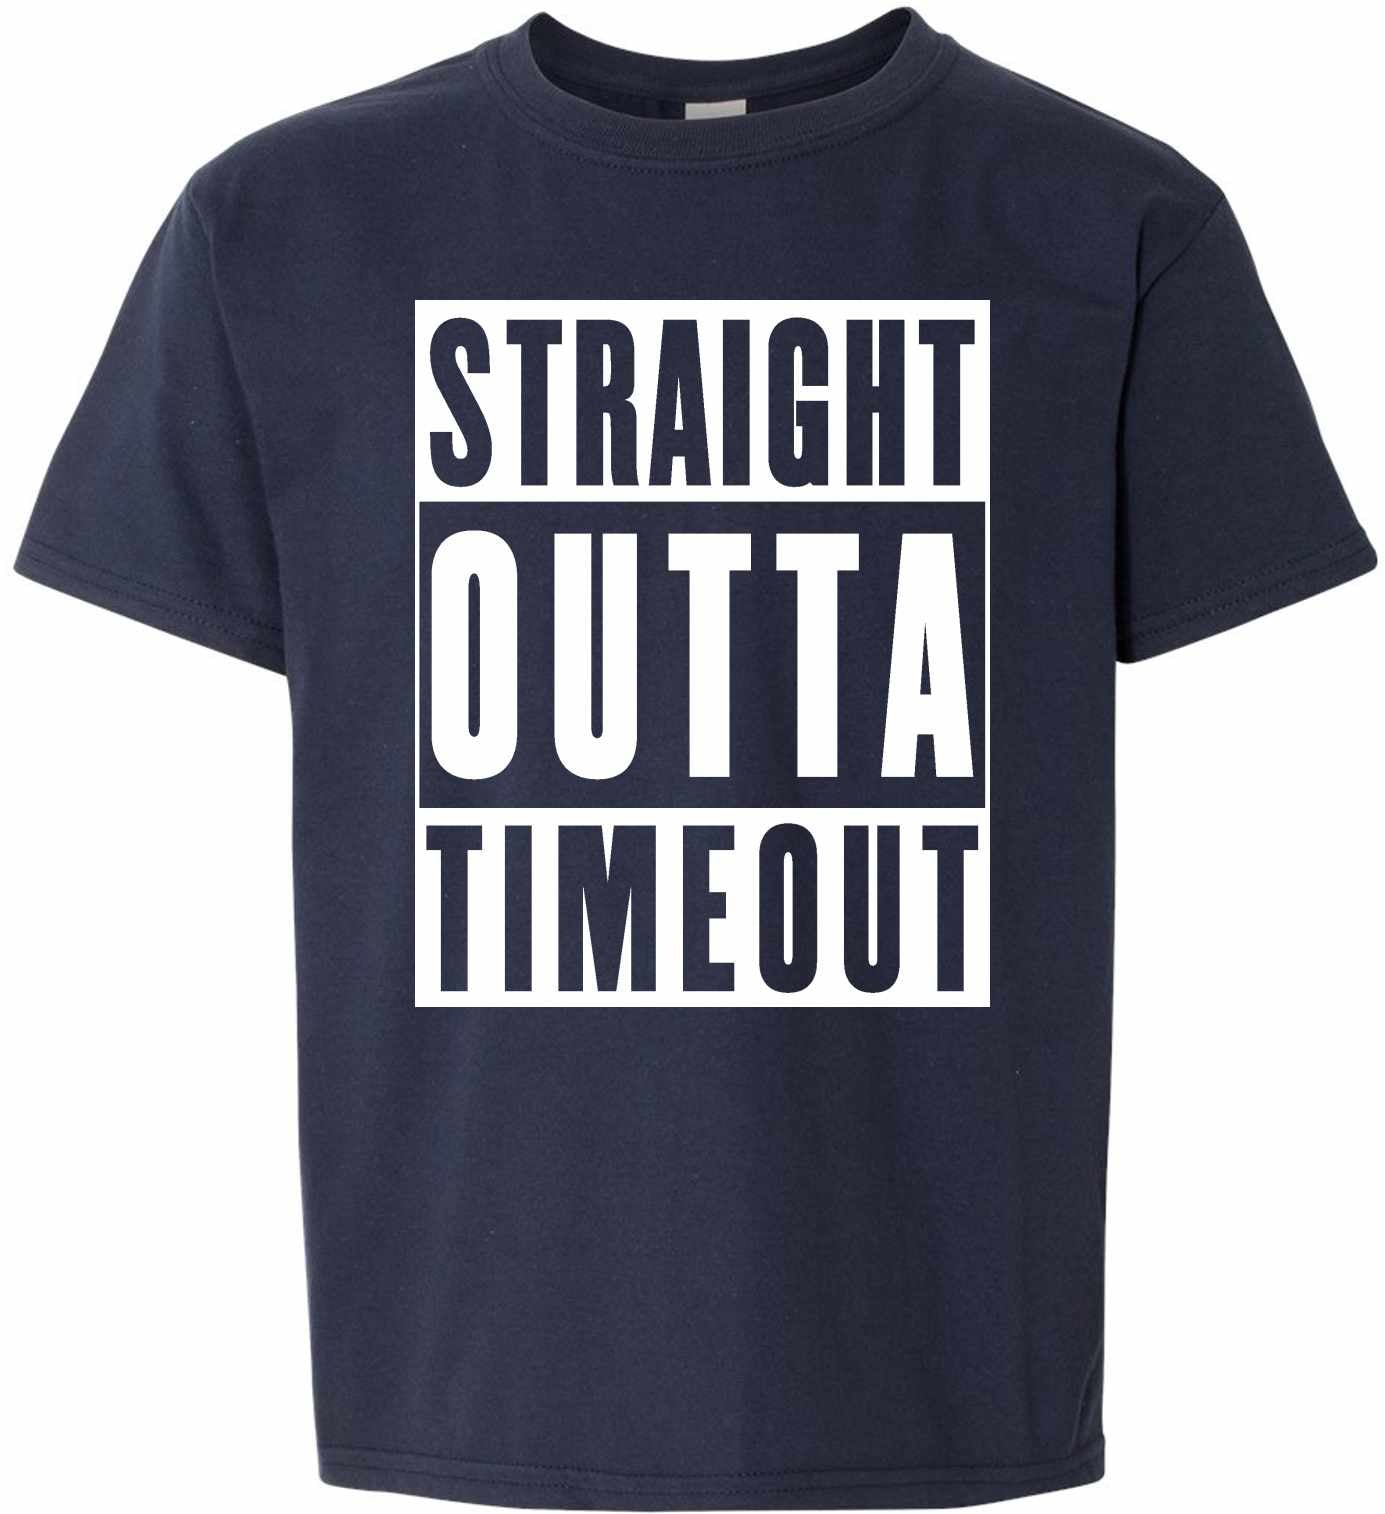 Straight Outta TimeOut on Kids T-Shirt (#1096-201)